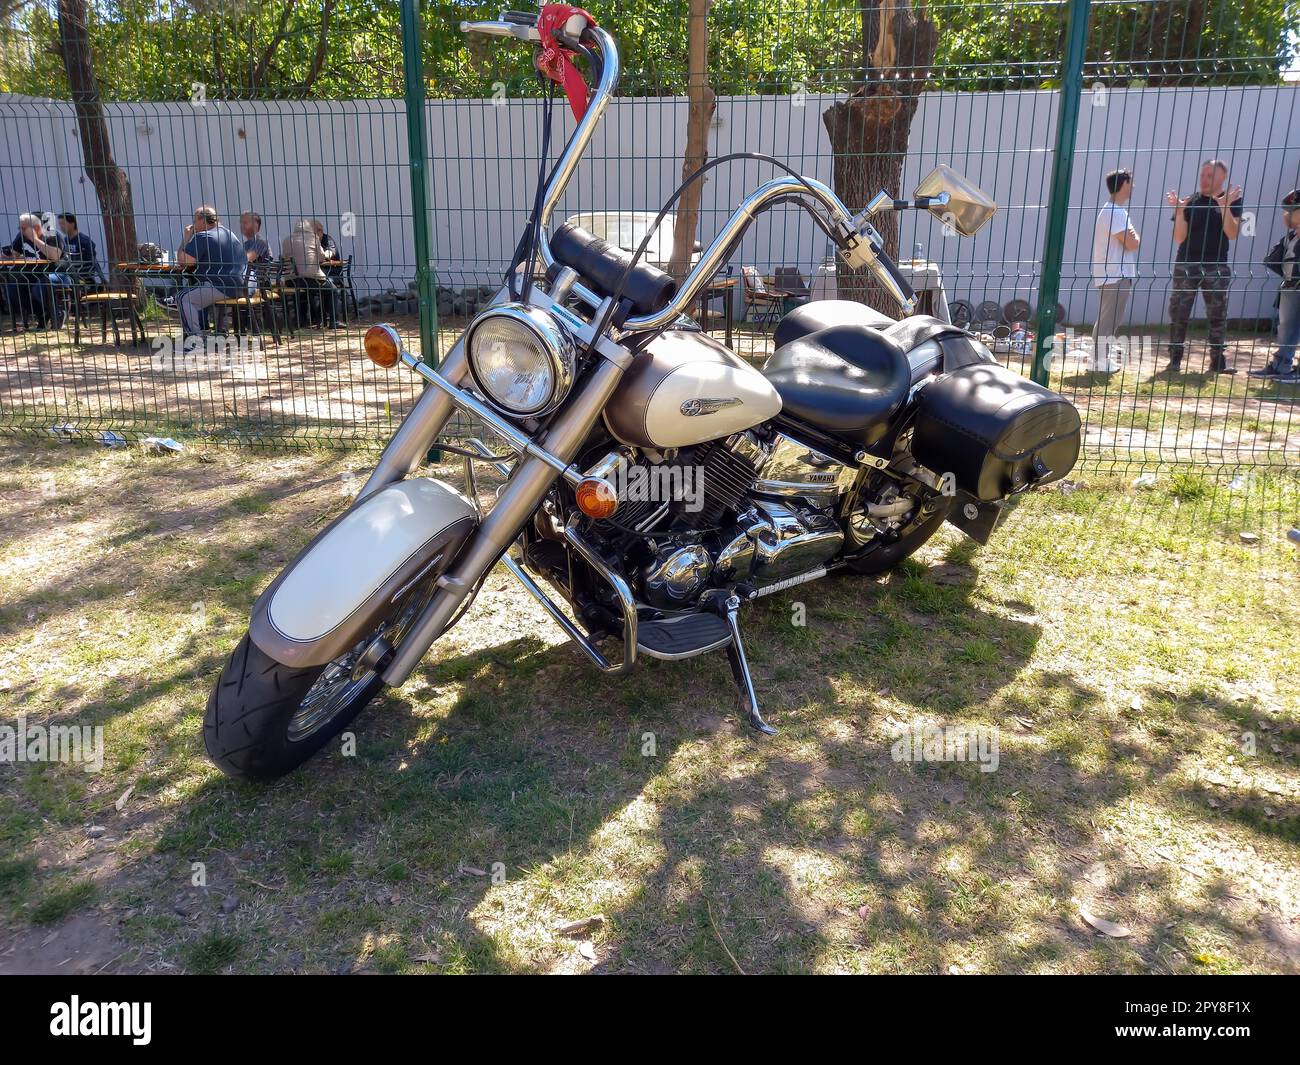 Lanus, Argentina - Sept 24, 2022: shot of a classic Yamaha DragStar bagger cruiser motorcycle in a park. Stock Photo